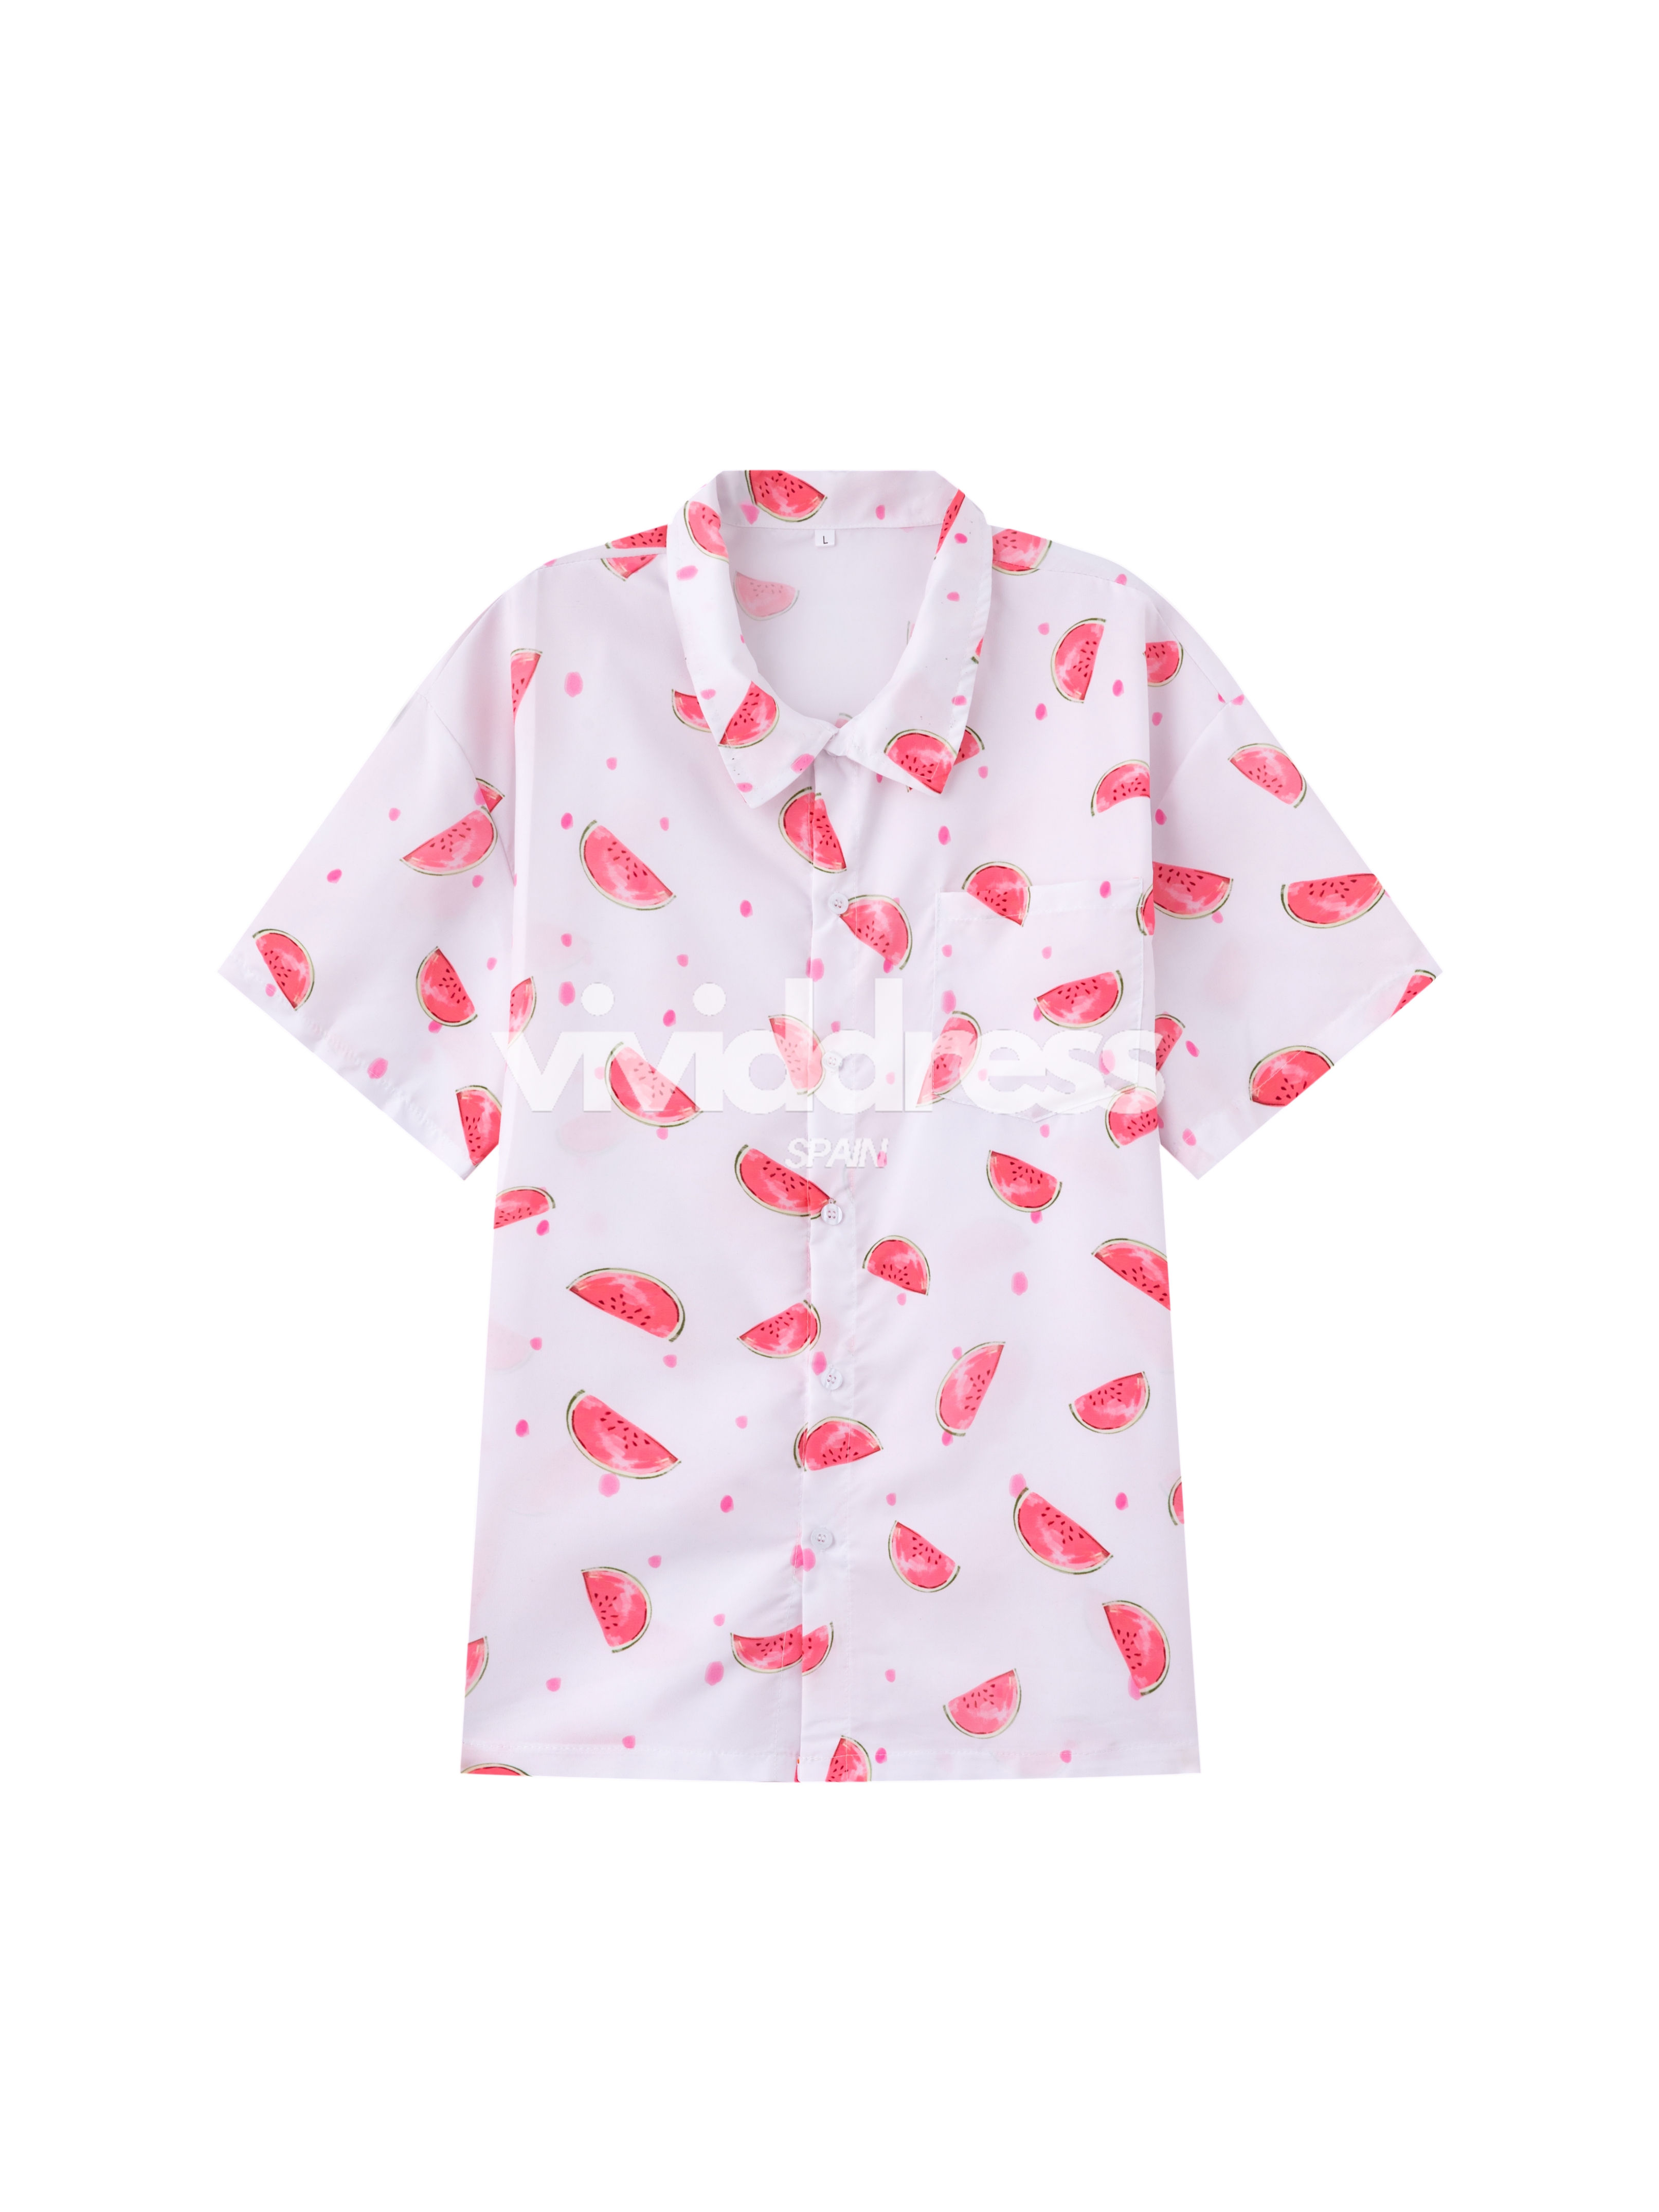 Men's Casual Watermelon Print Beach Hawaiian Holiday Short Sleeve Shirt